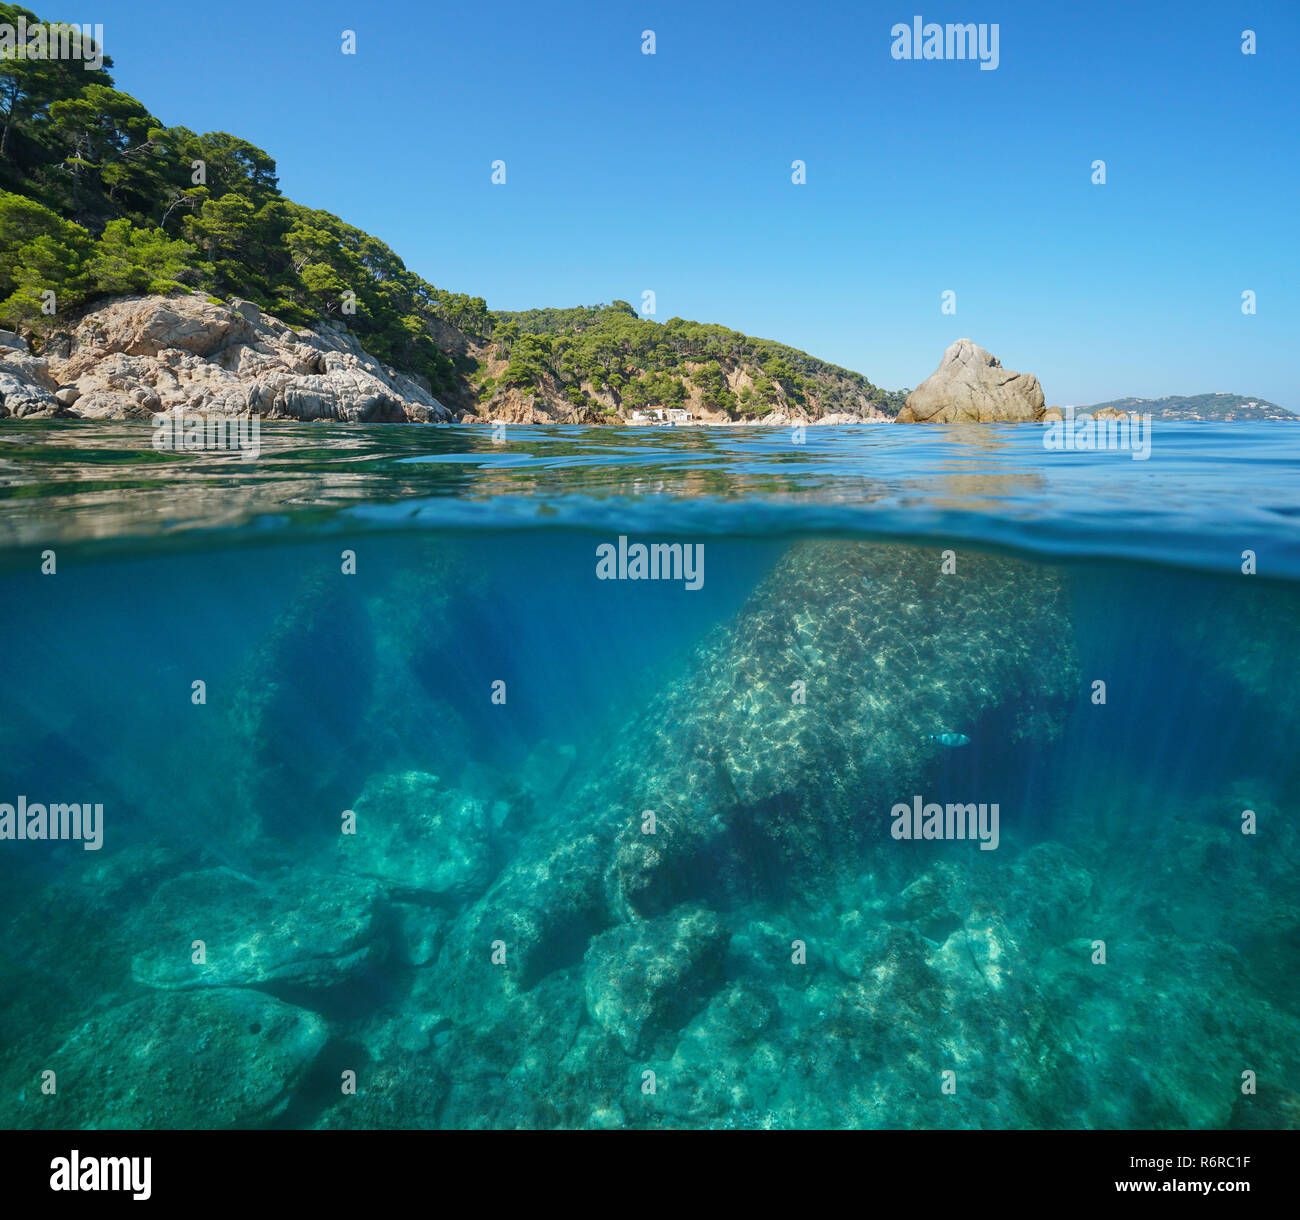 Rocky coastline with large rocks underwater sea, split view half above and below water surface, Mediterranean, Palamos, Costa Brava, Spain Stock Photo